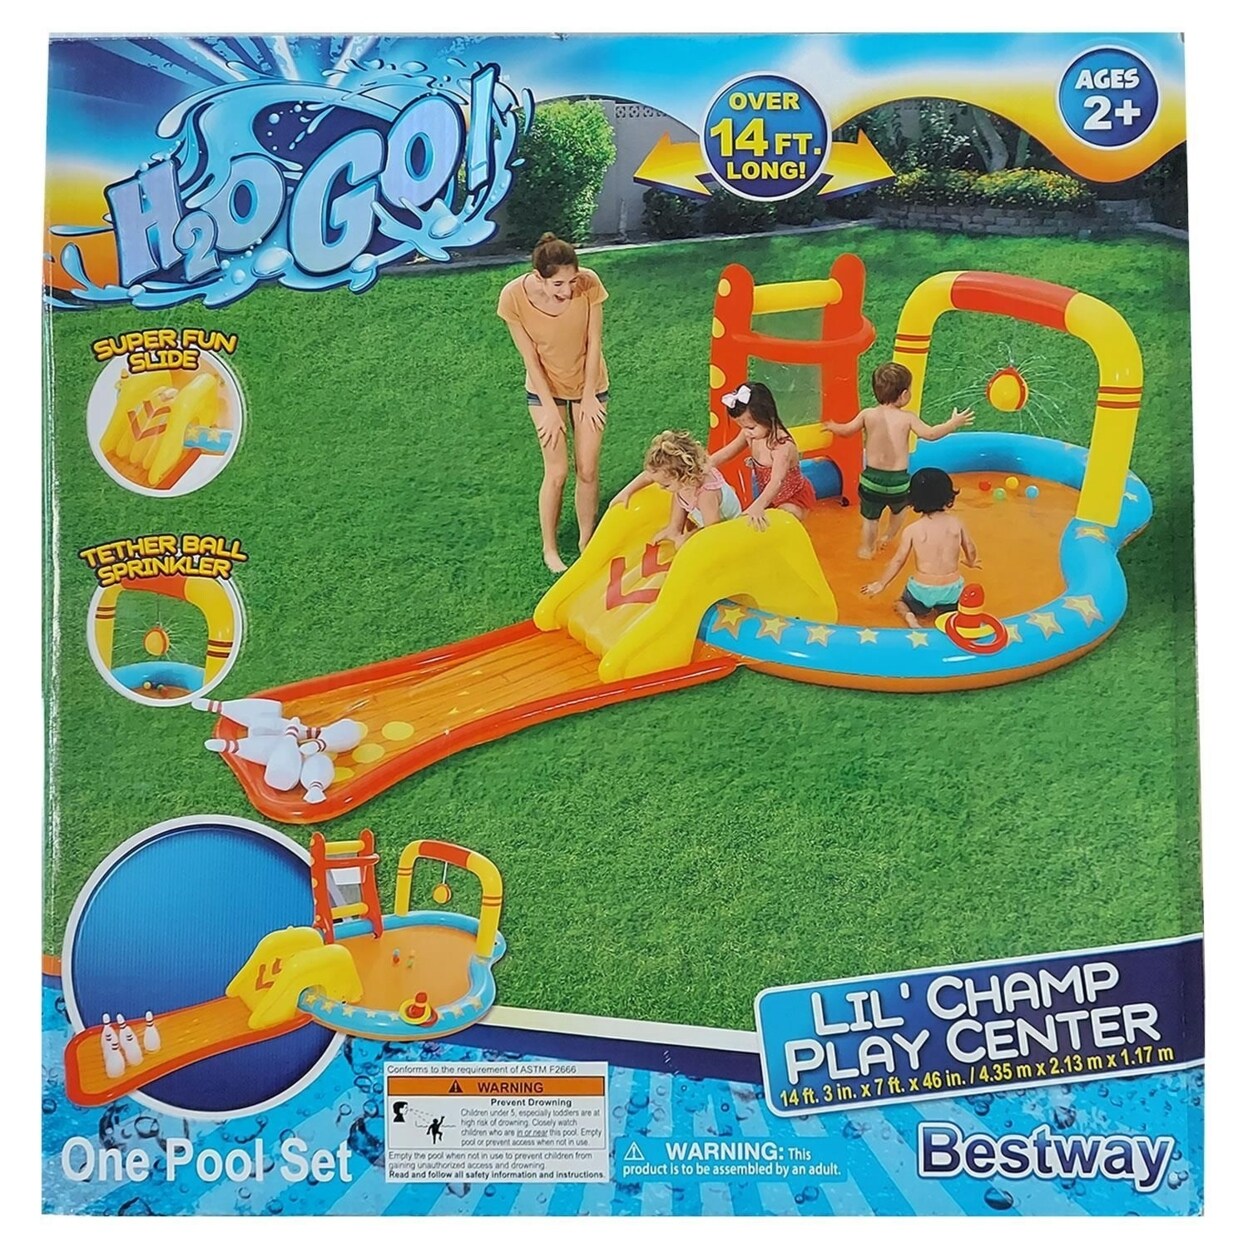 Bestway Kids Inflatable 14 Pool Lil Champ Play Center Slide Sprinkler Outdoor Fun